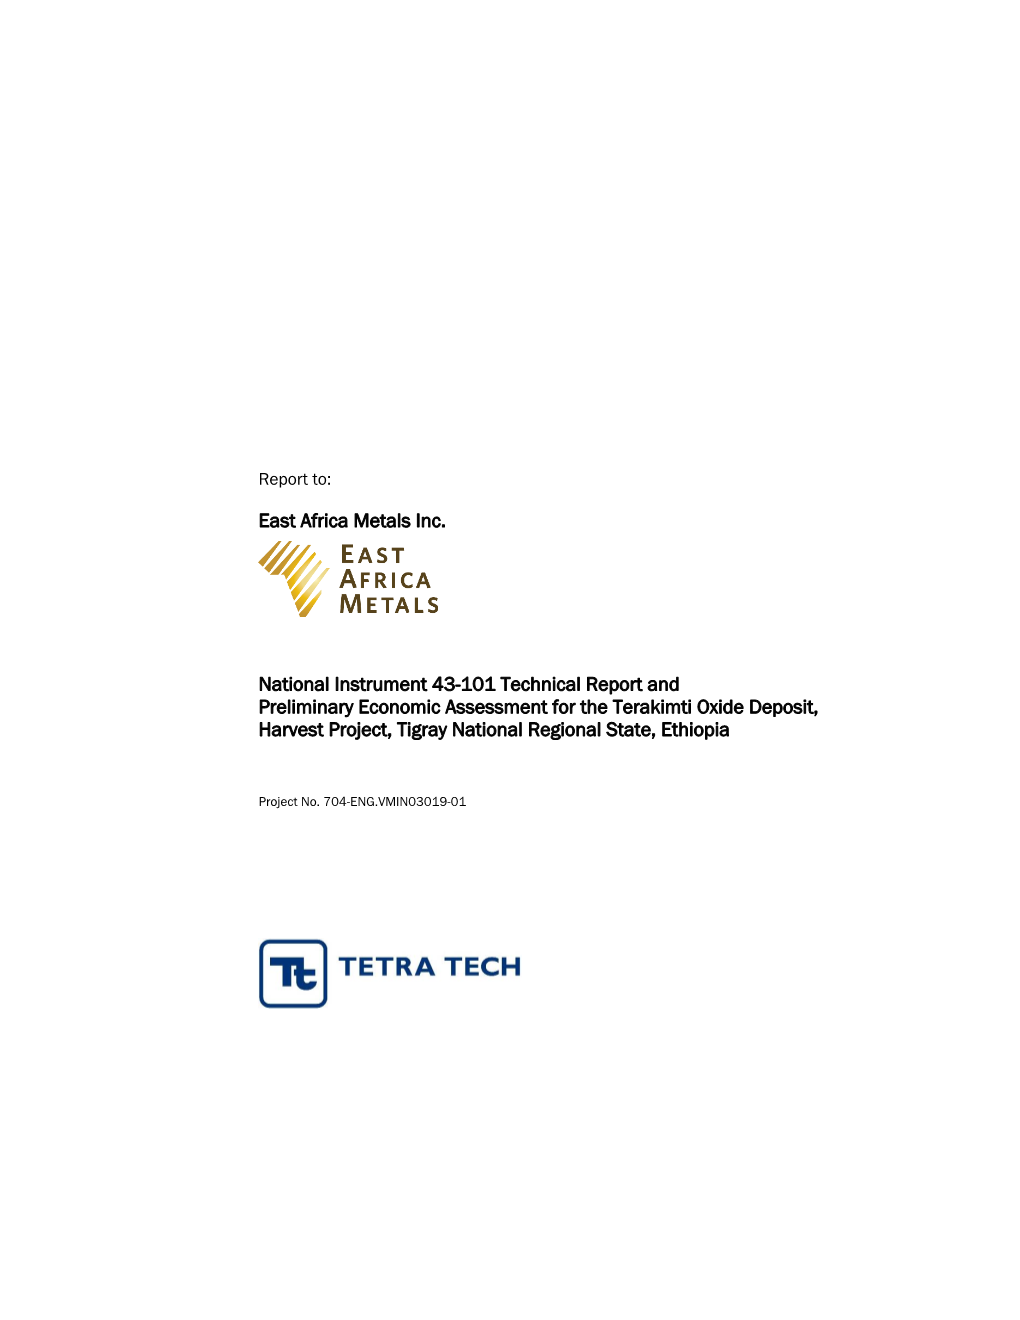 East Africa Metals Inc. National Instrument 43-101 Technical Report